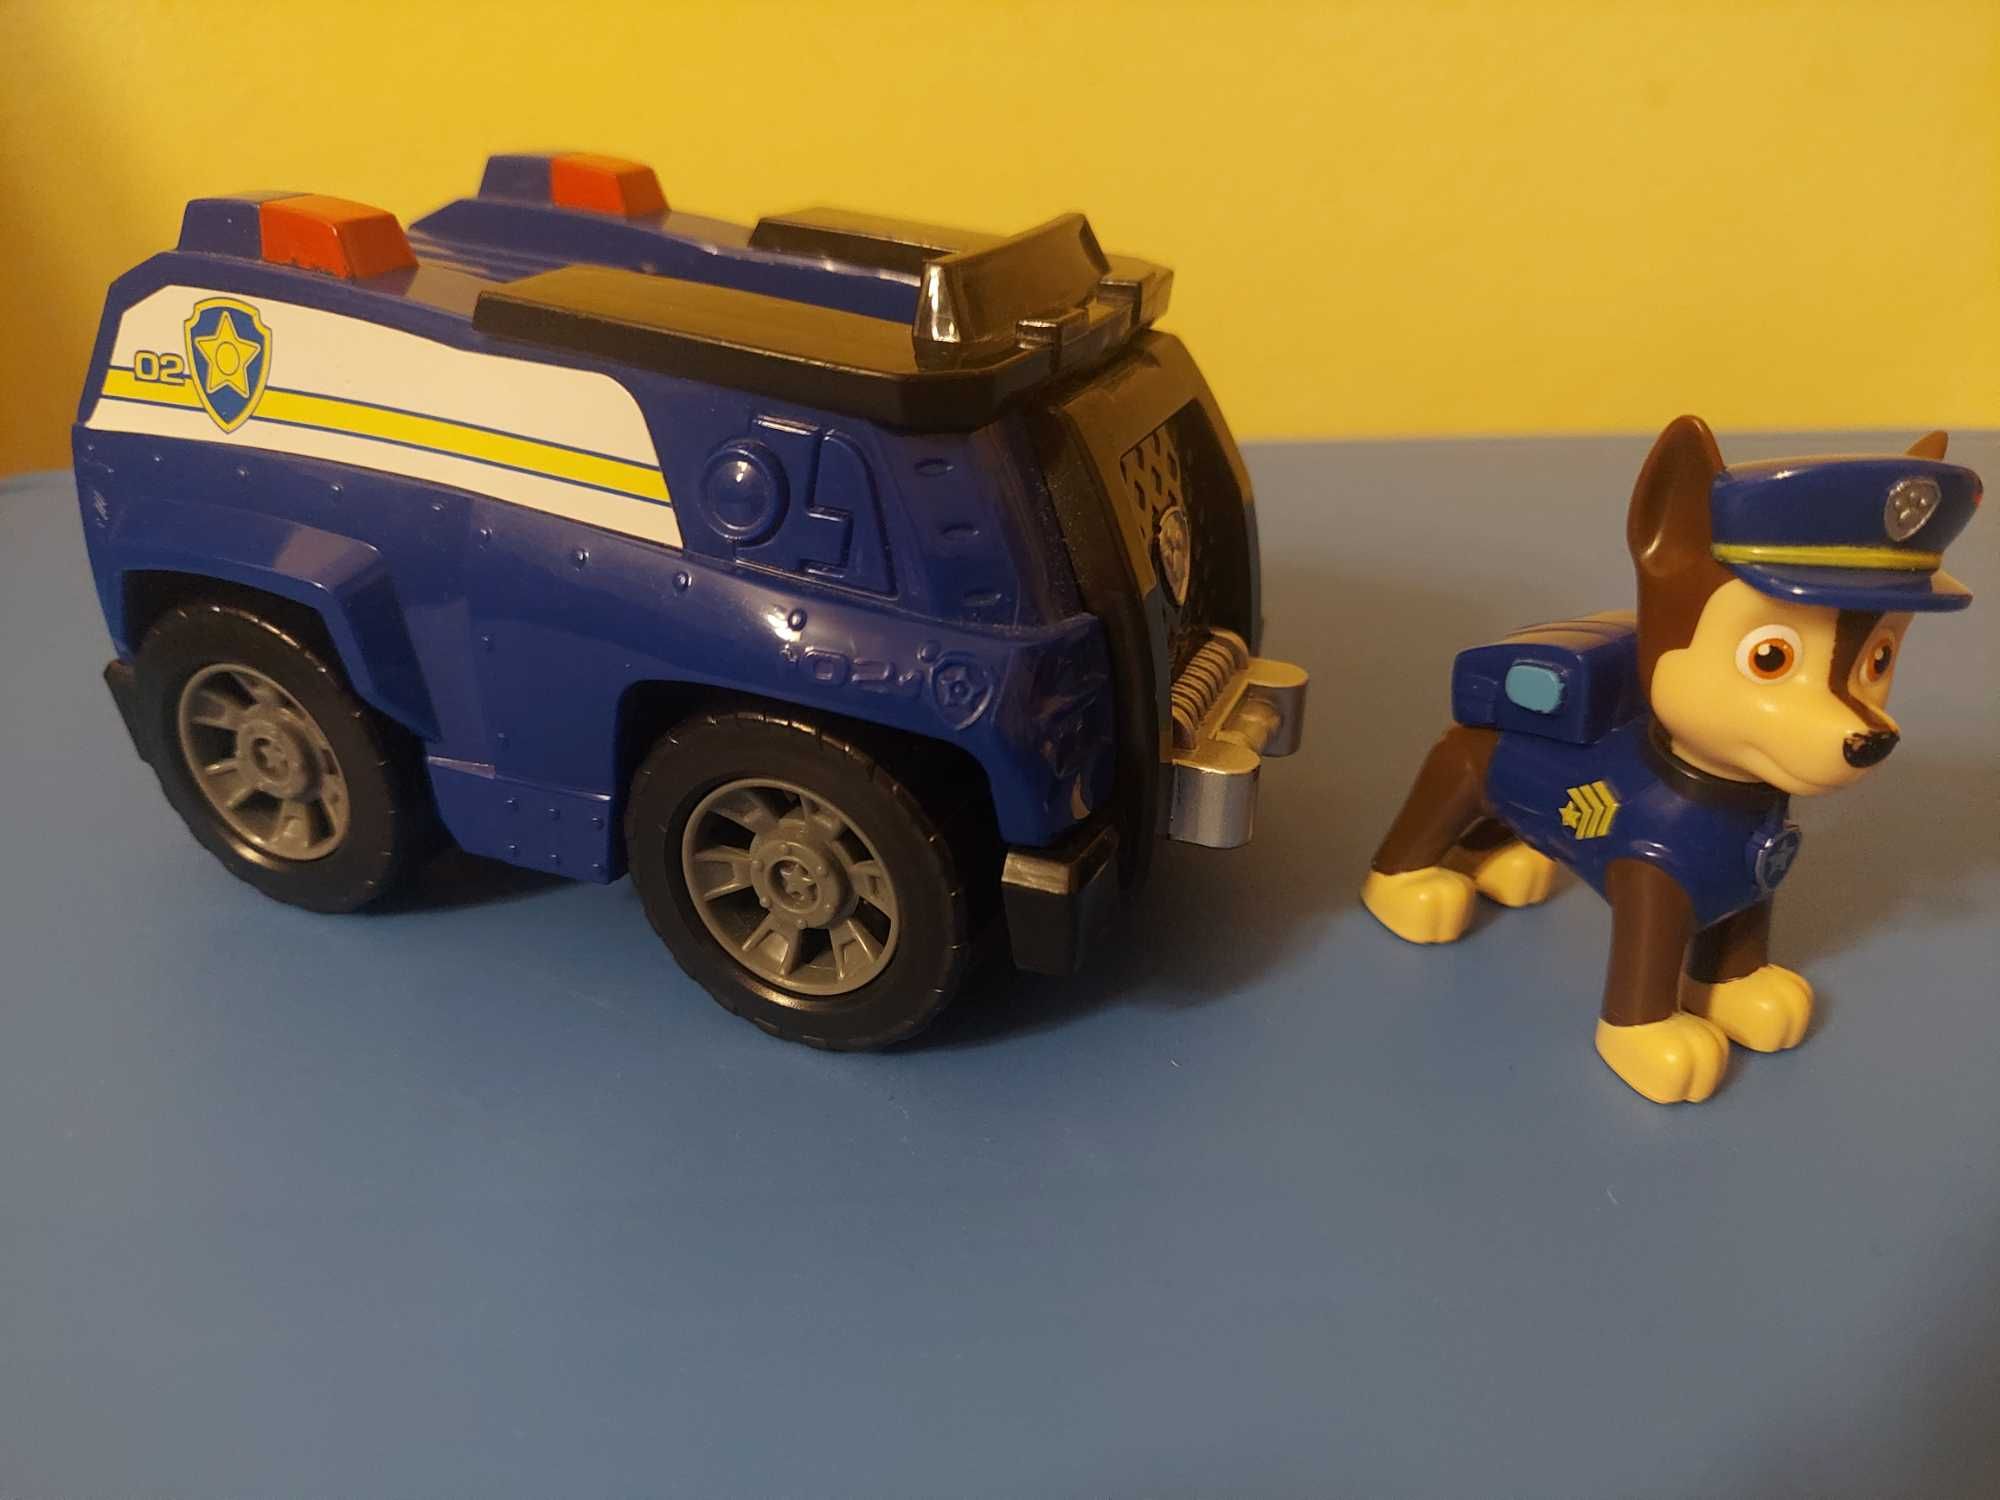 Psi Patrol, Chase, pojazd z figurką